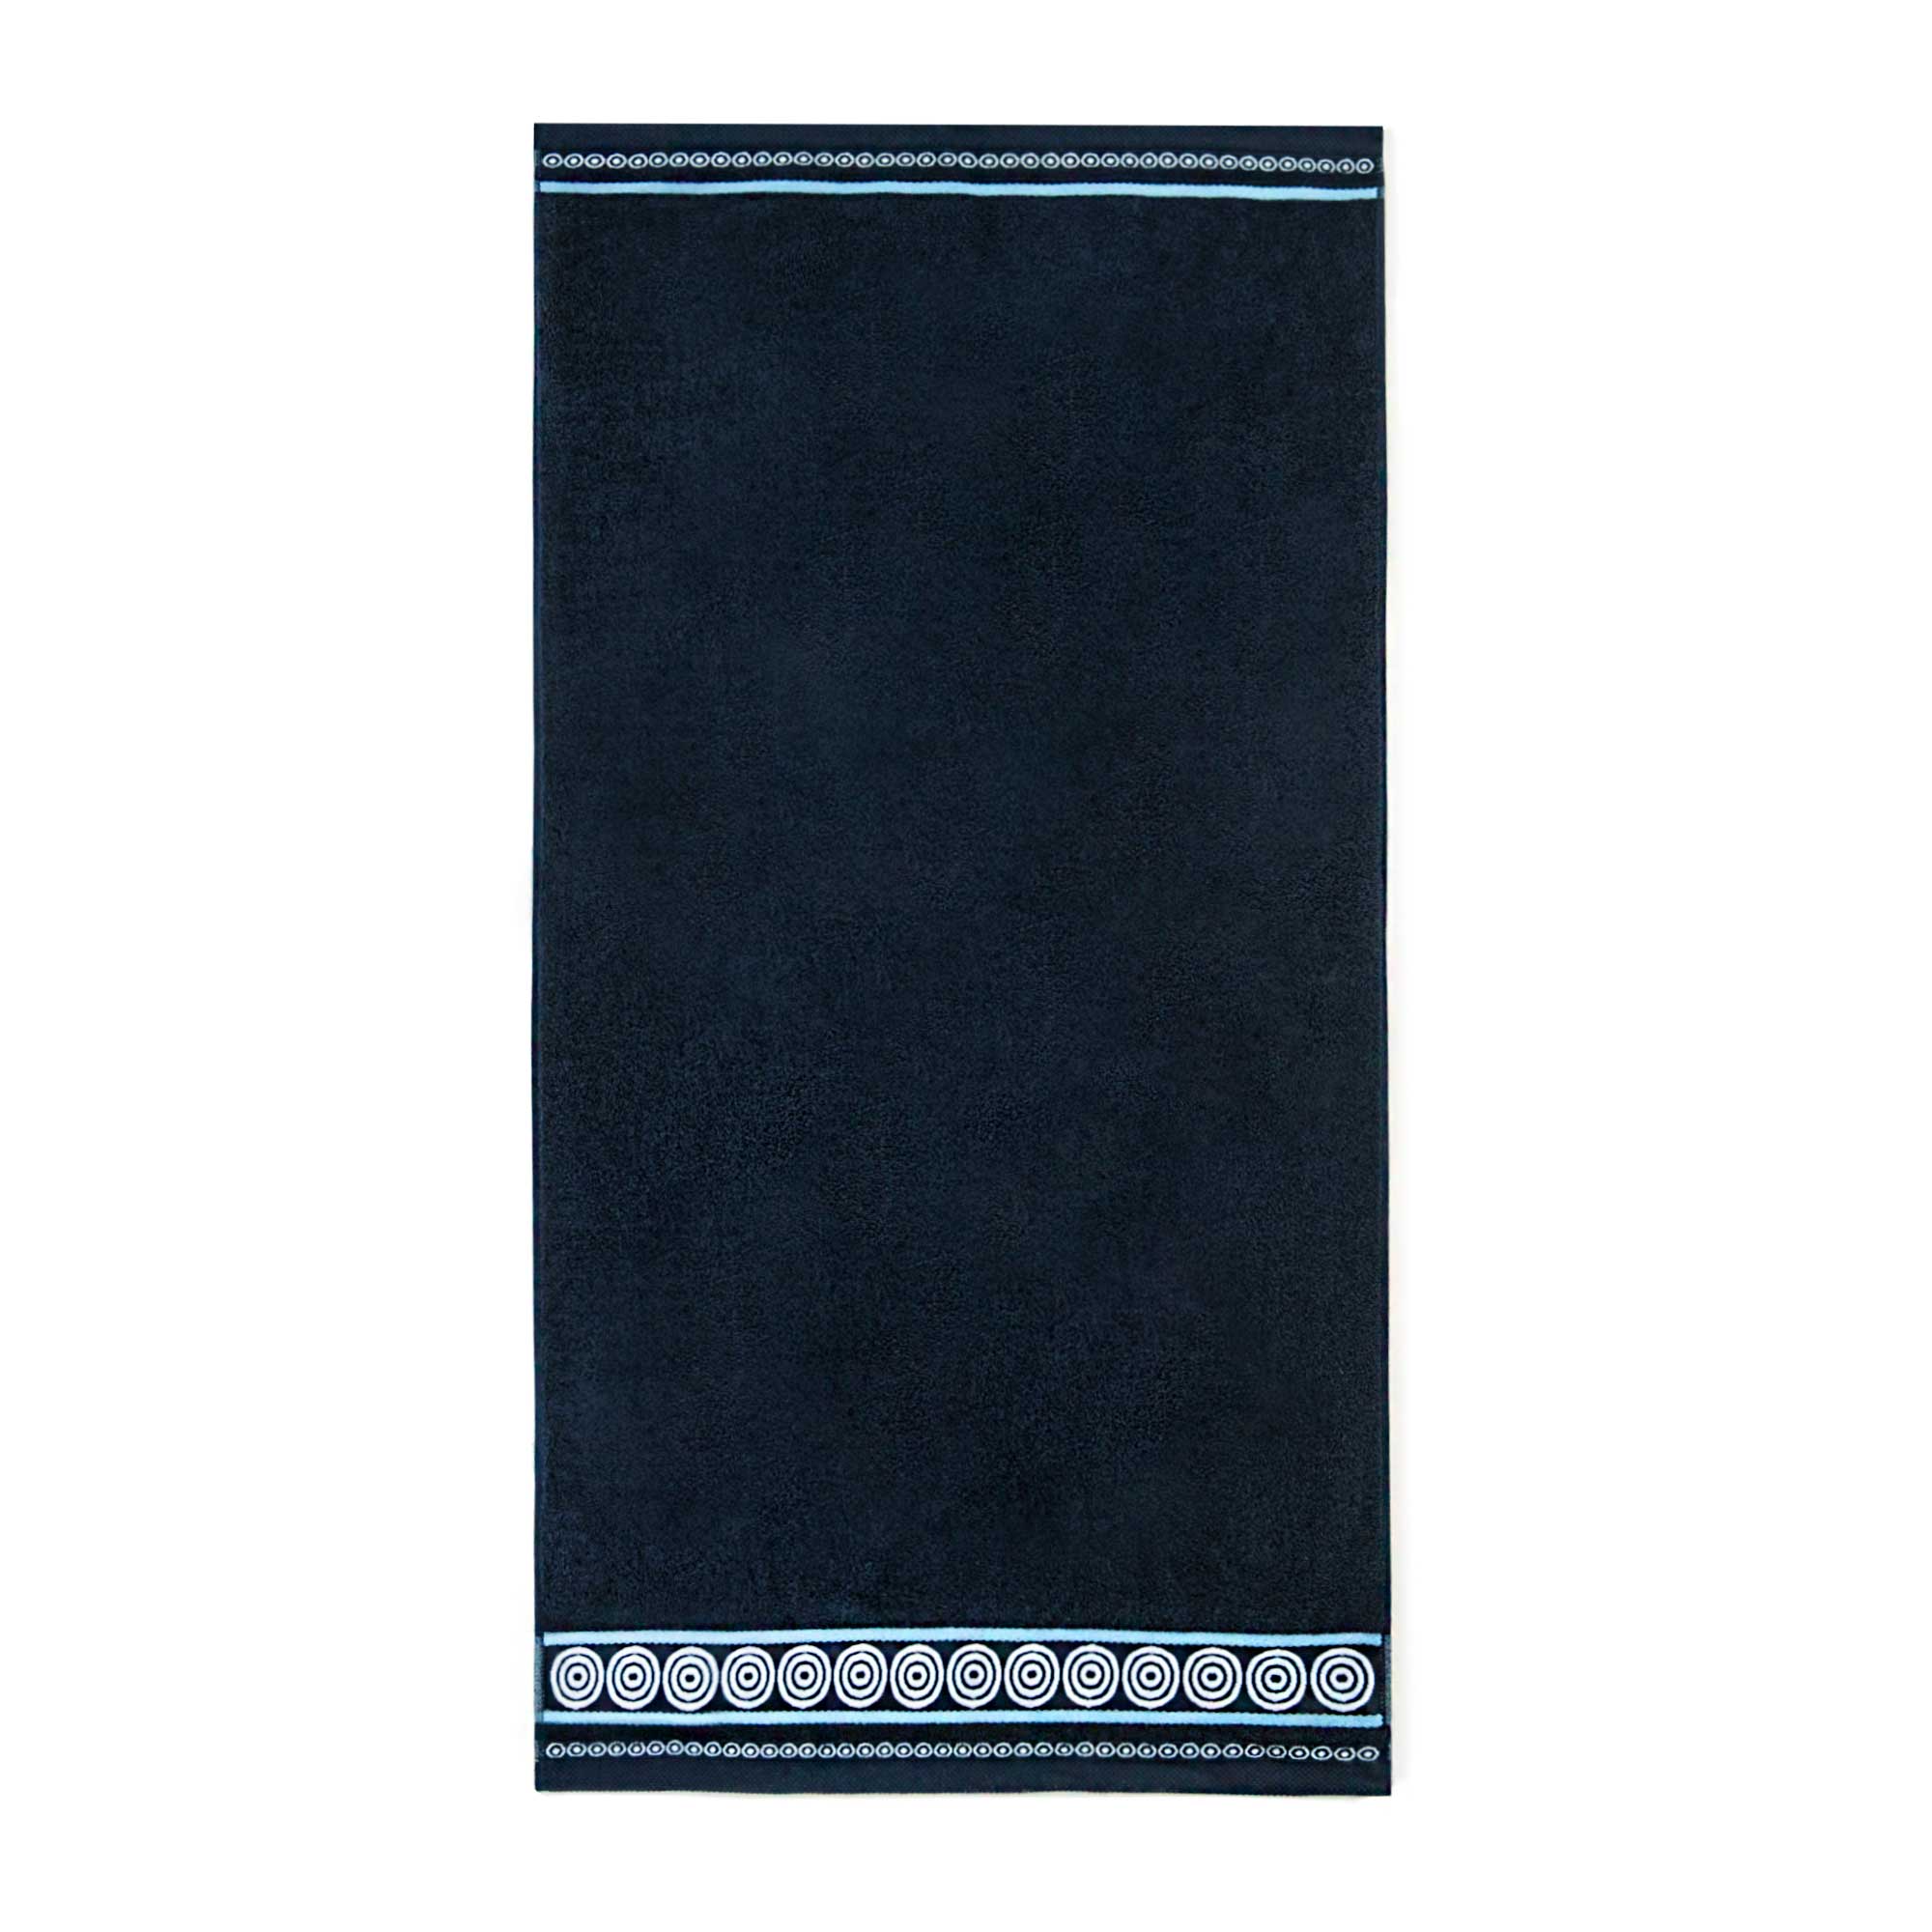 Zwoltex Unisex's Towel Rondo 2 Navy Blue